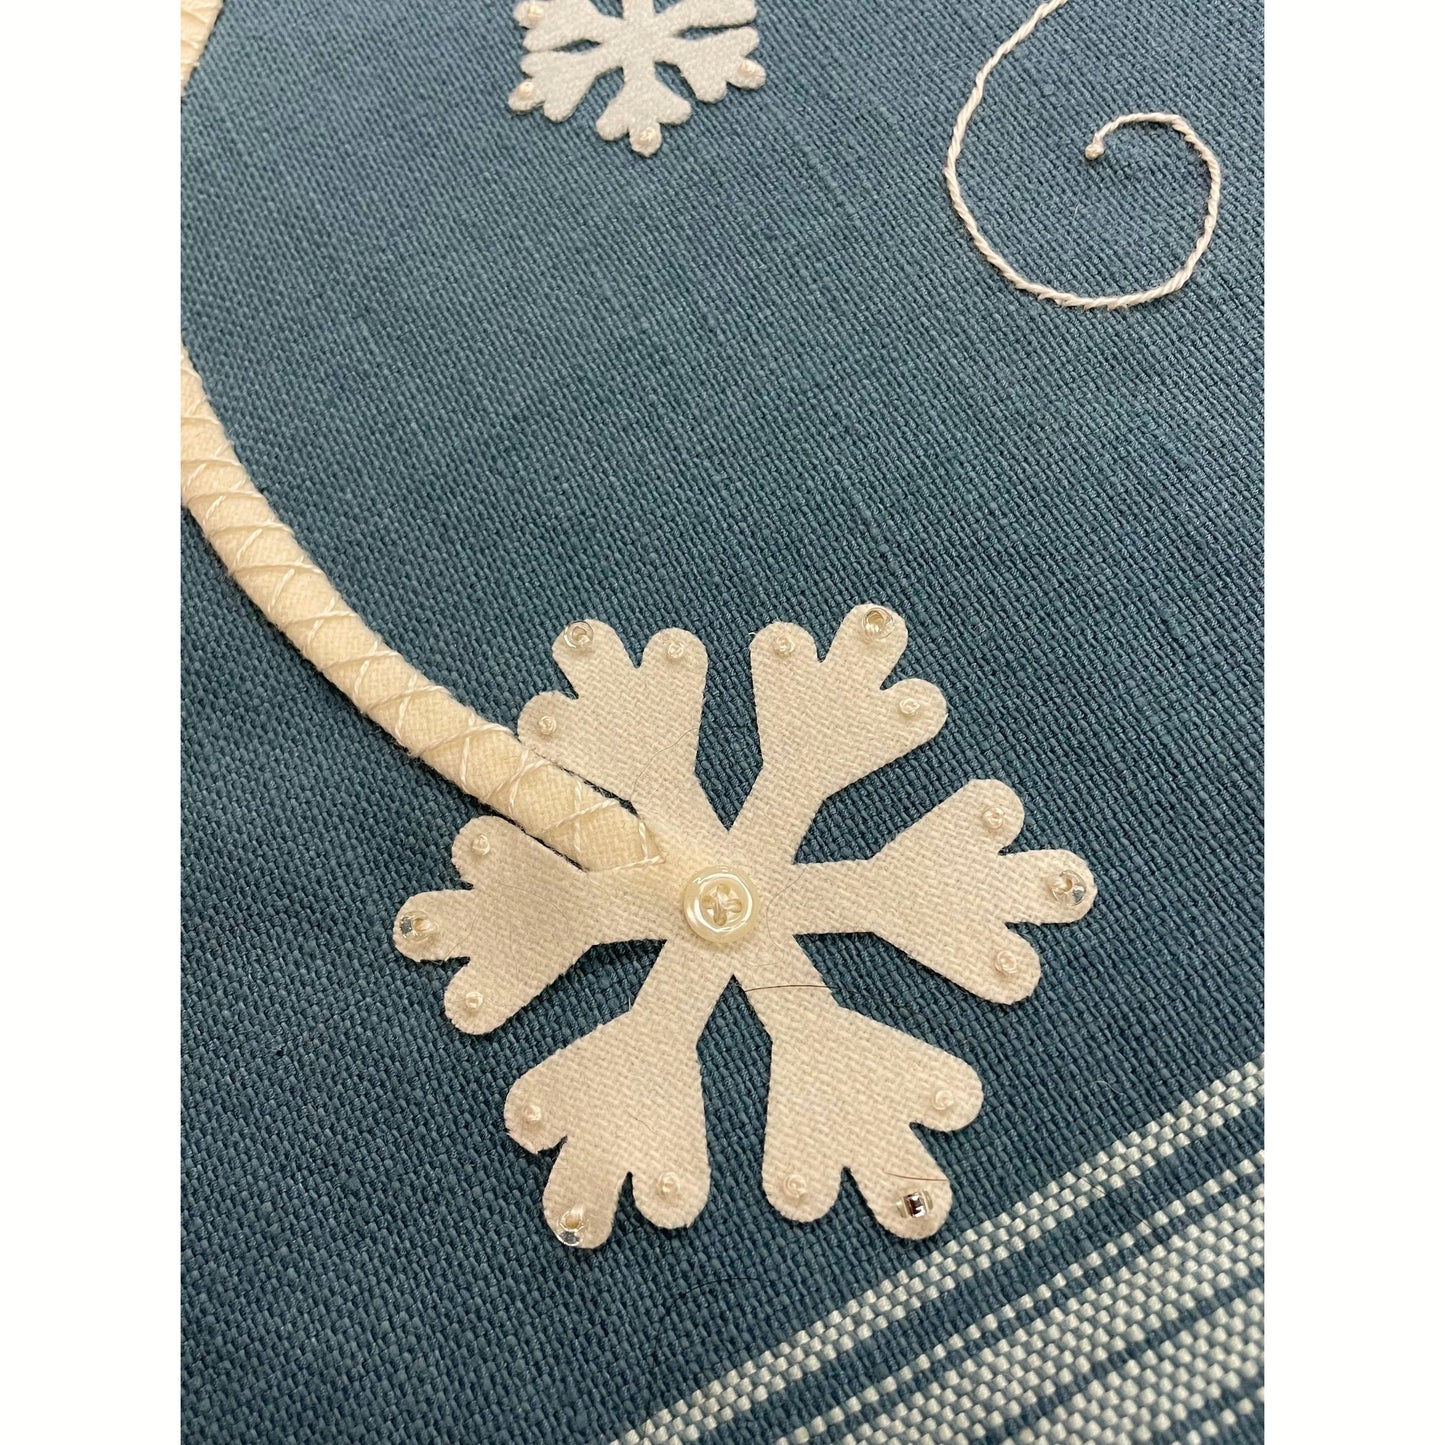 Designs by Tamara ~ Winter Snowflake Table Runner Applique Pattern